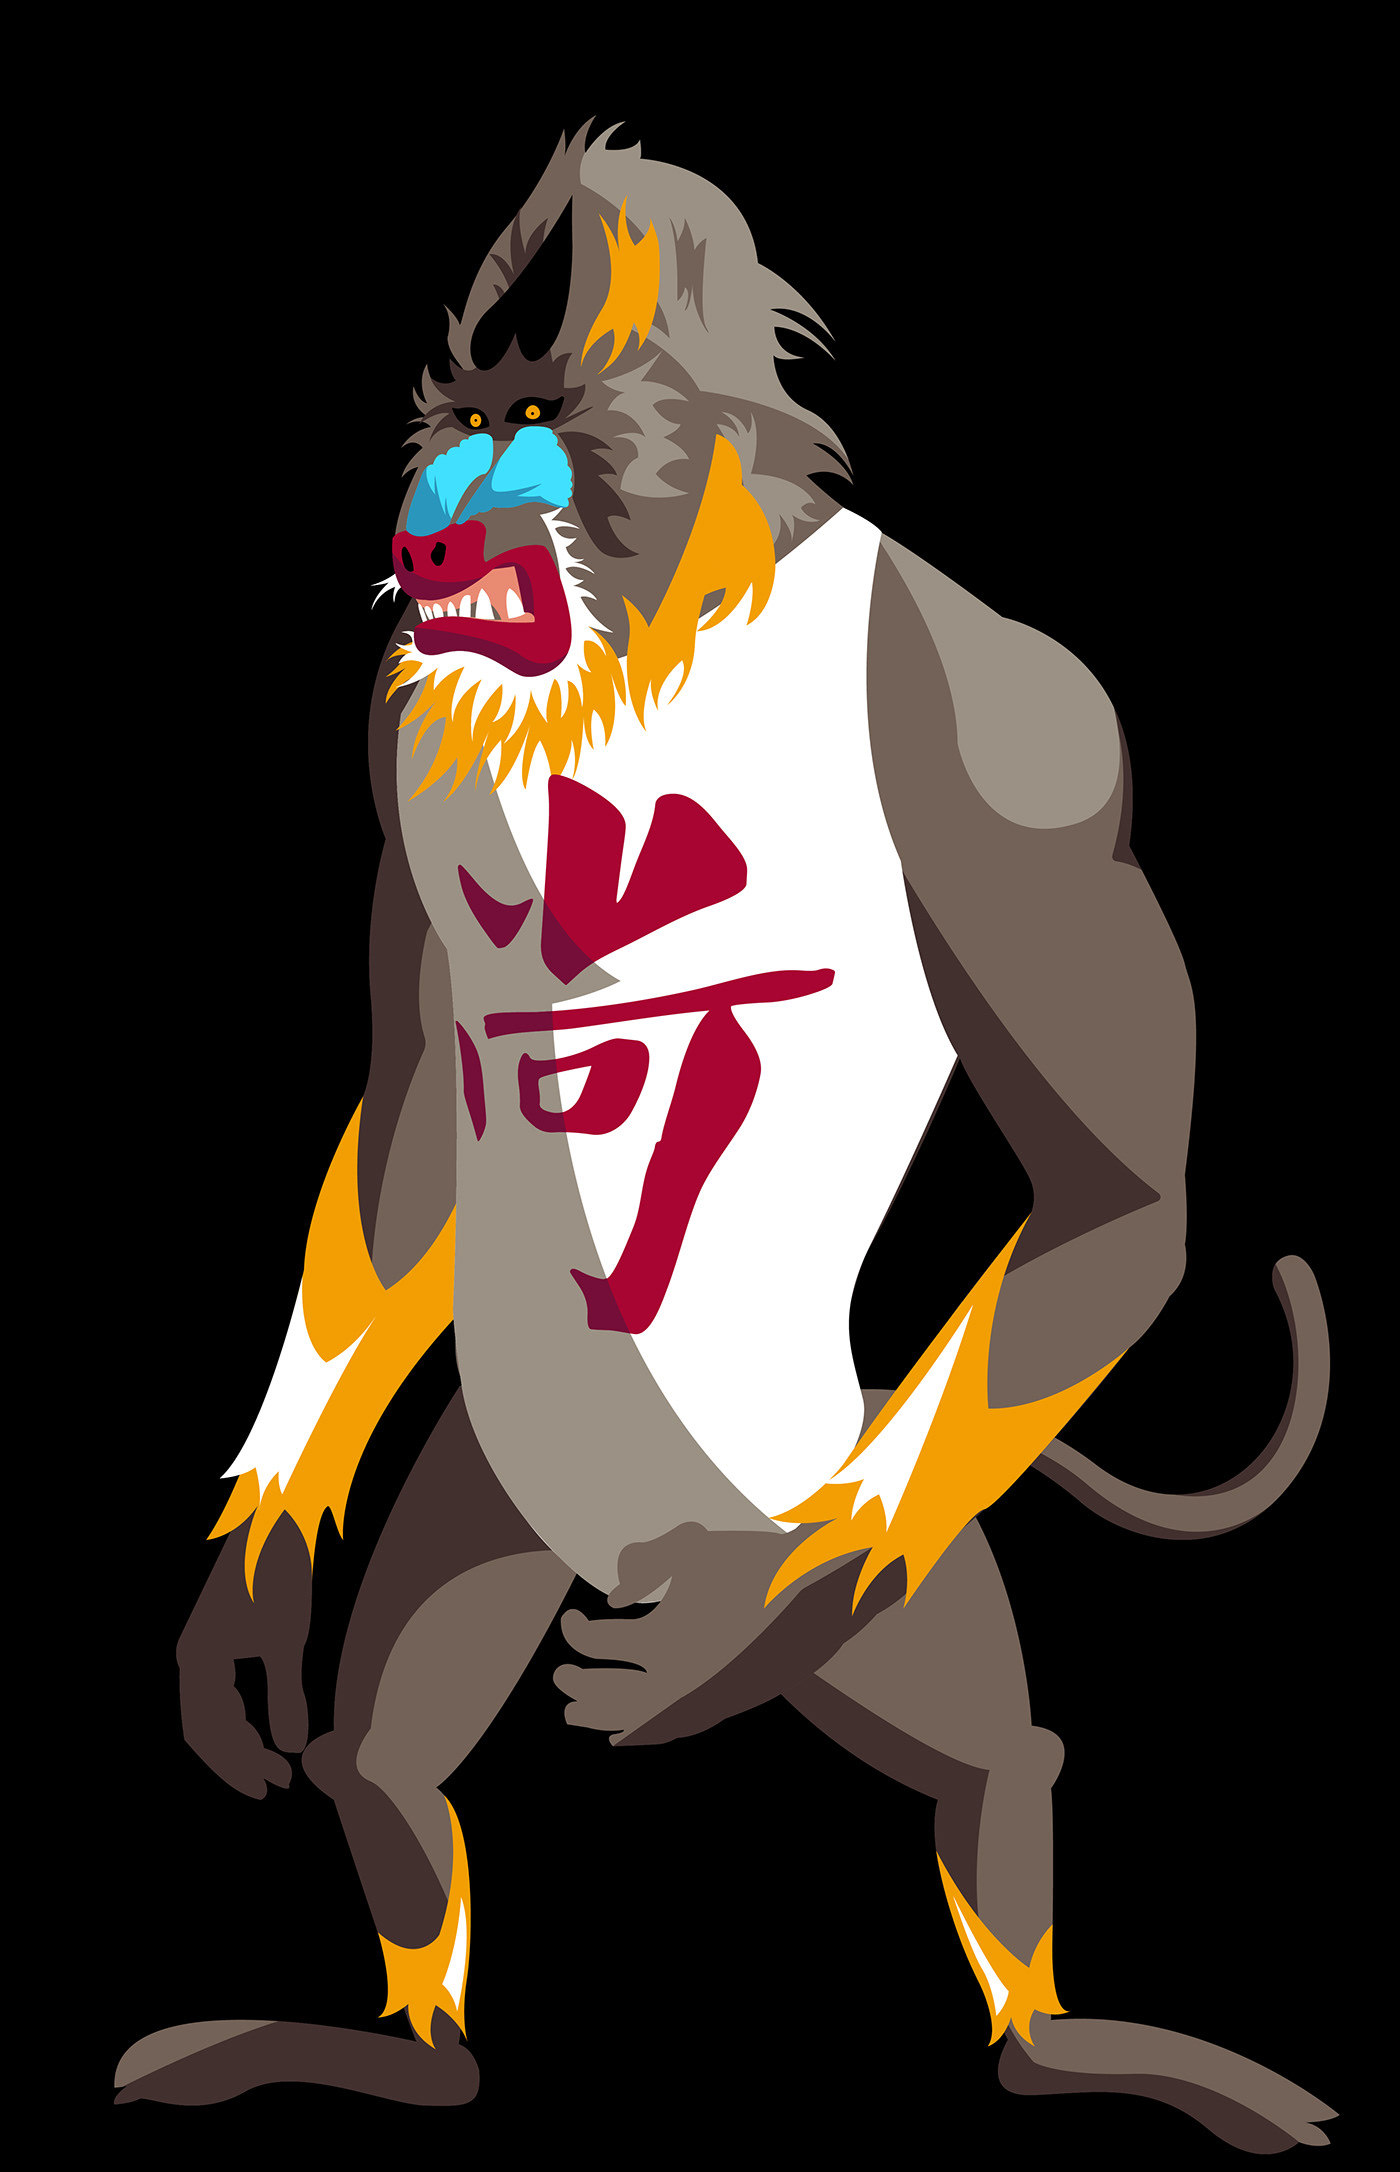 graphic design  Character design  Illustrator branding  Advertising  Baboon graphic ILLUSTRATION  digital